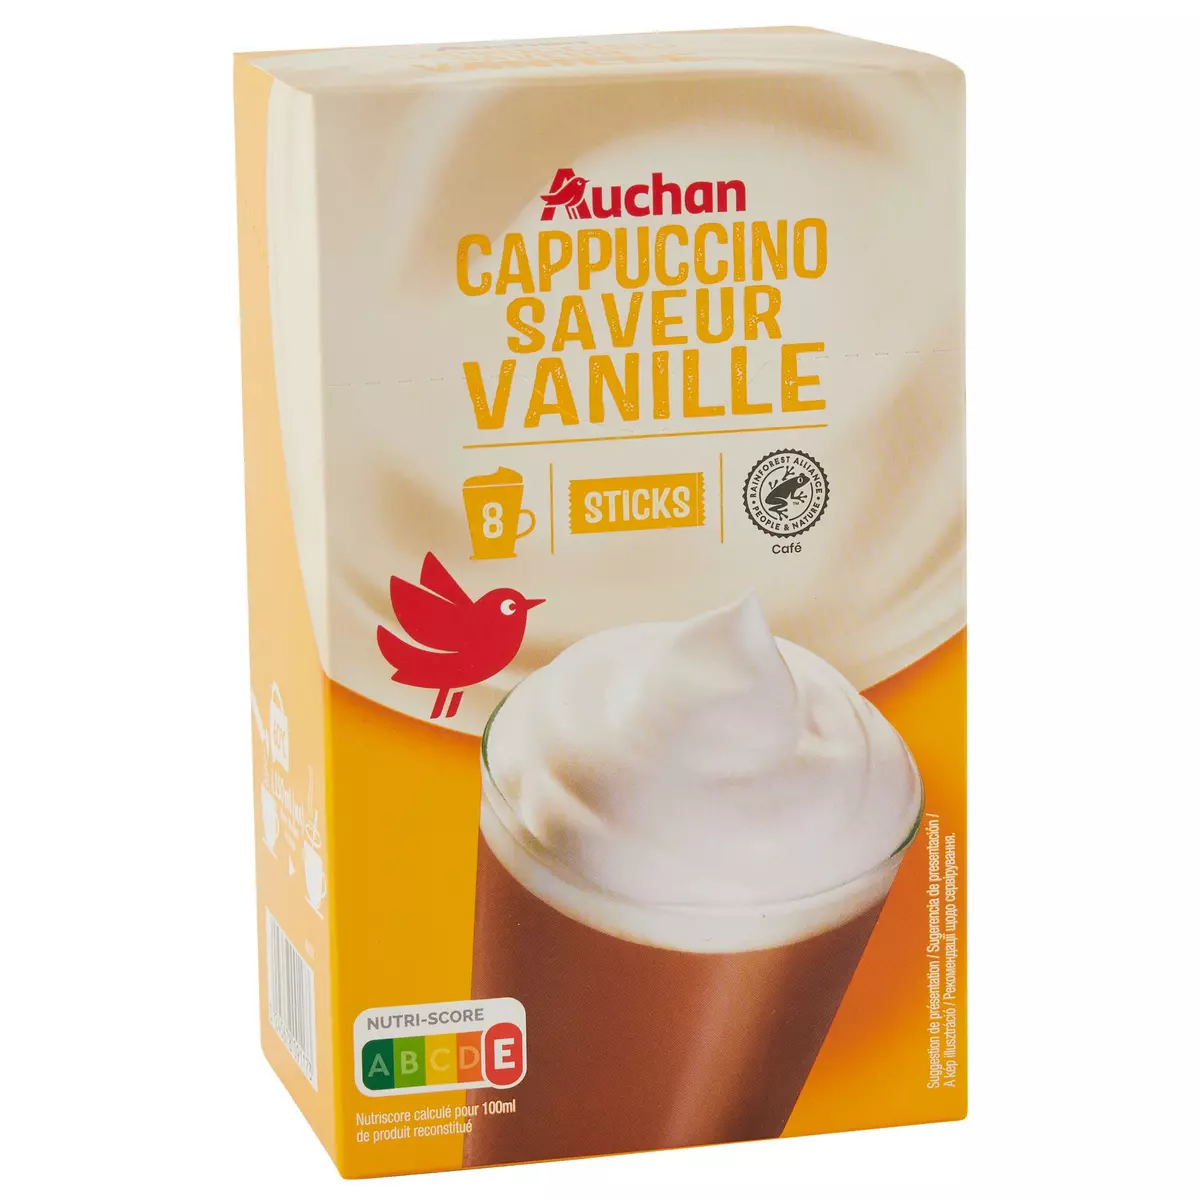 AUCHAN Café soluble Cappuccino saveur vanille sticks 8 sticks 144g